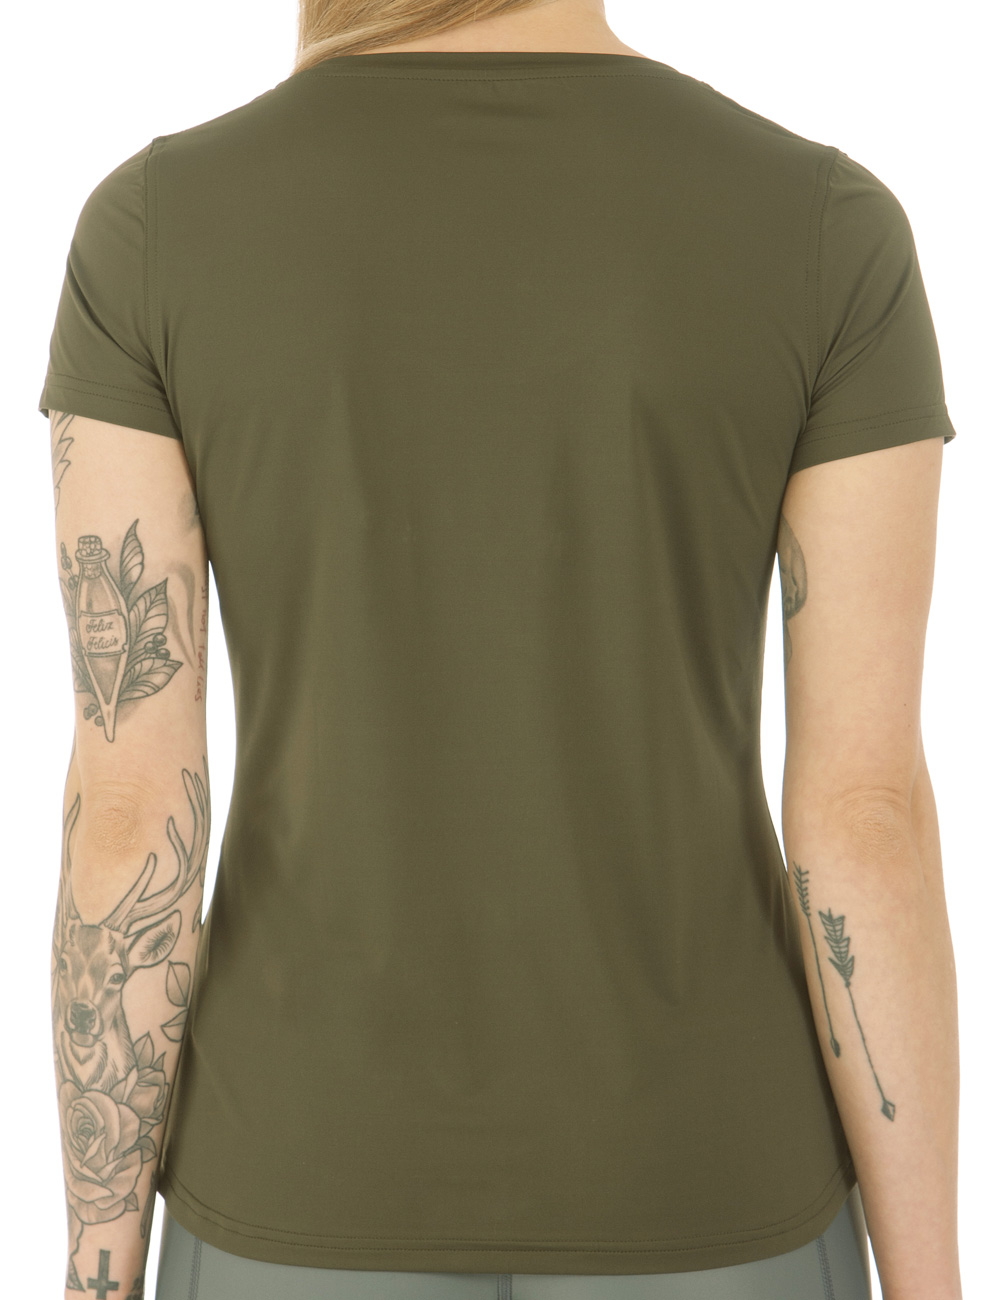 UV FREE Weitsicht shirt kurzarm grün back